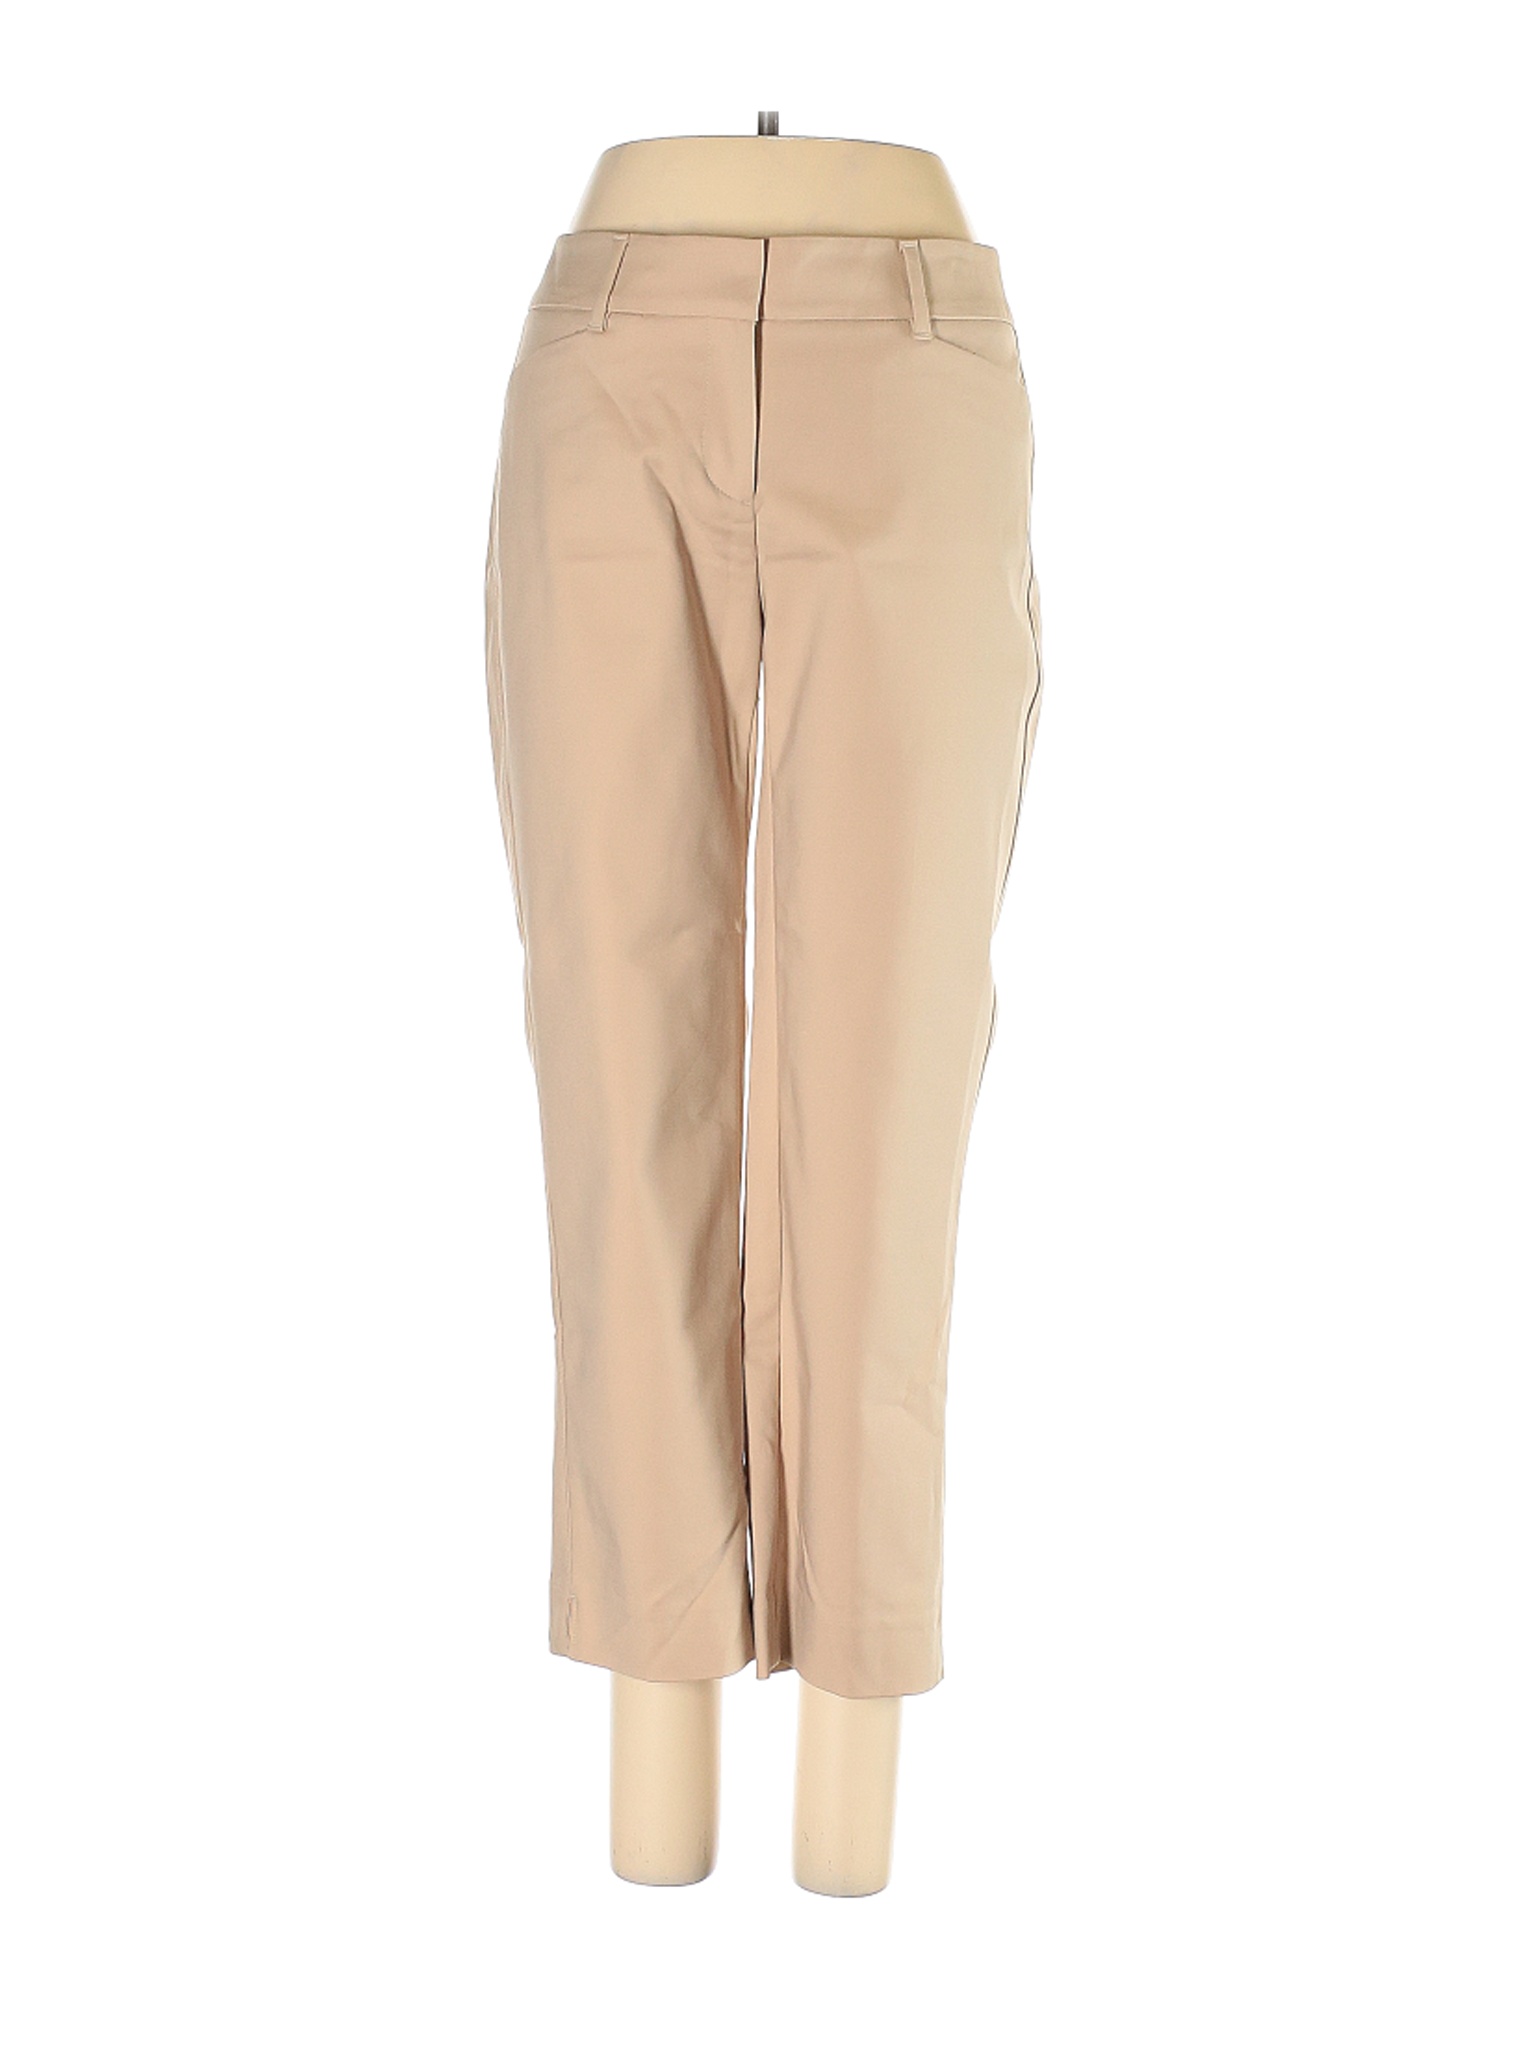 NWT White House Black Market Women Brown Casual Pants 2 | eBay